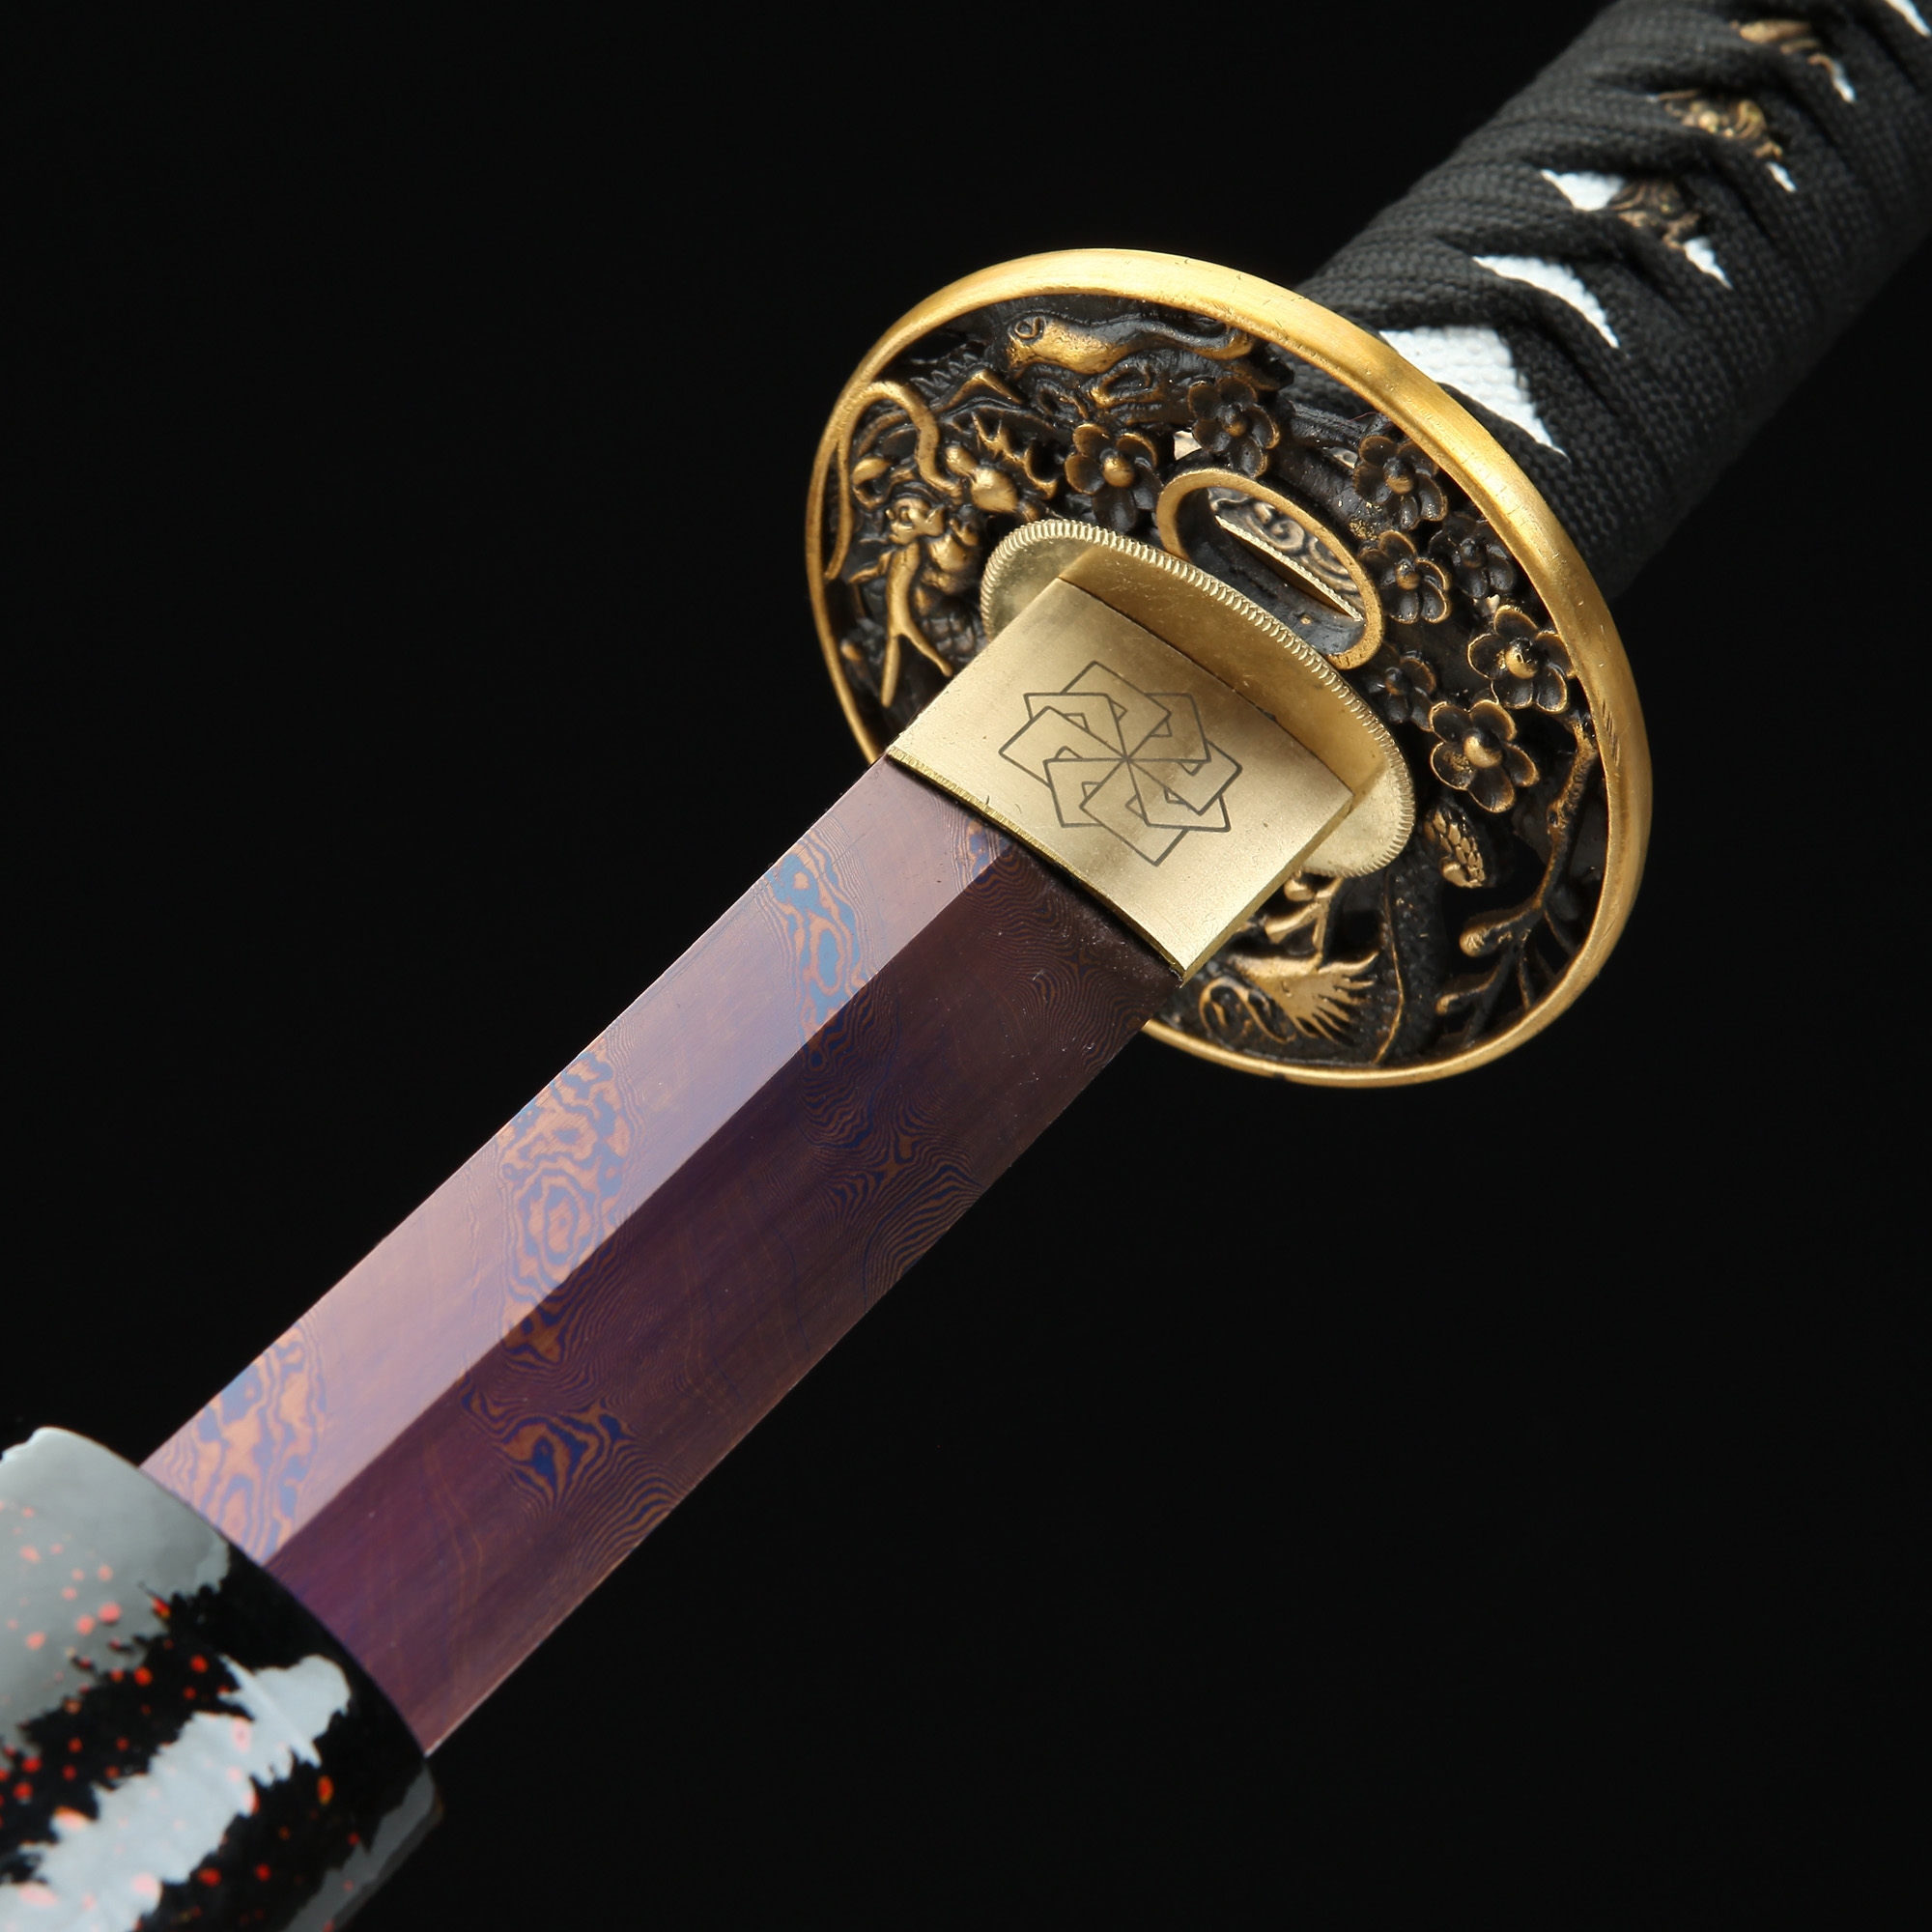 coustom made japanese real katana sword